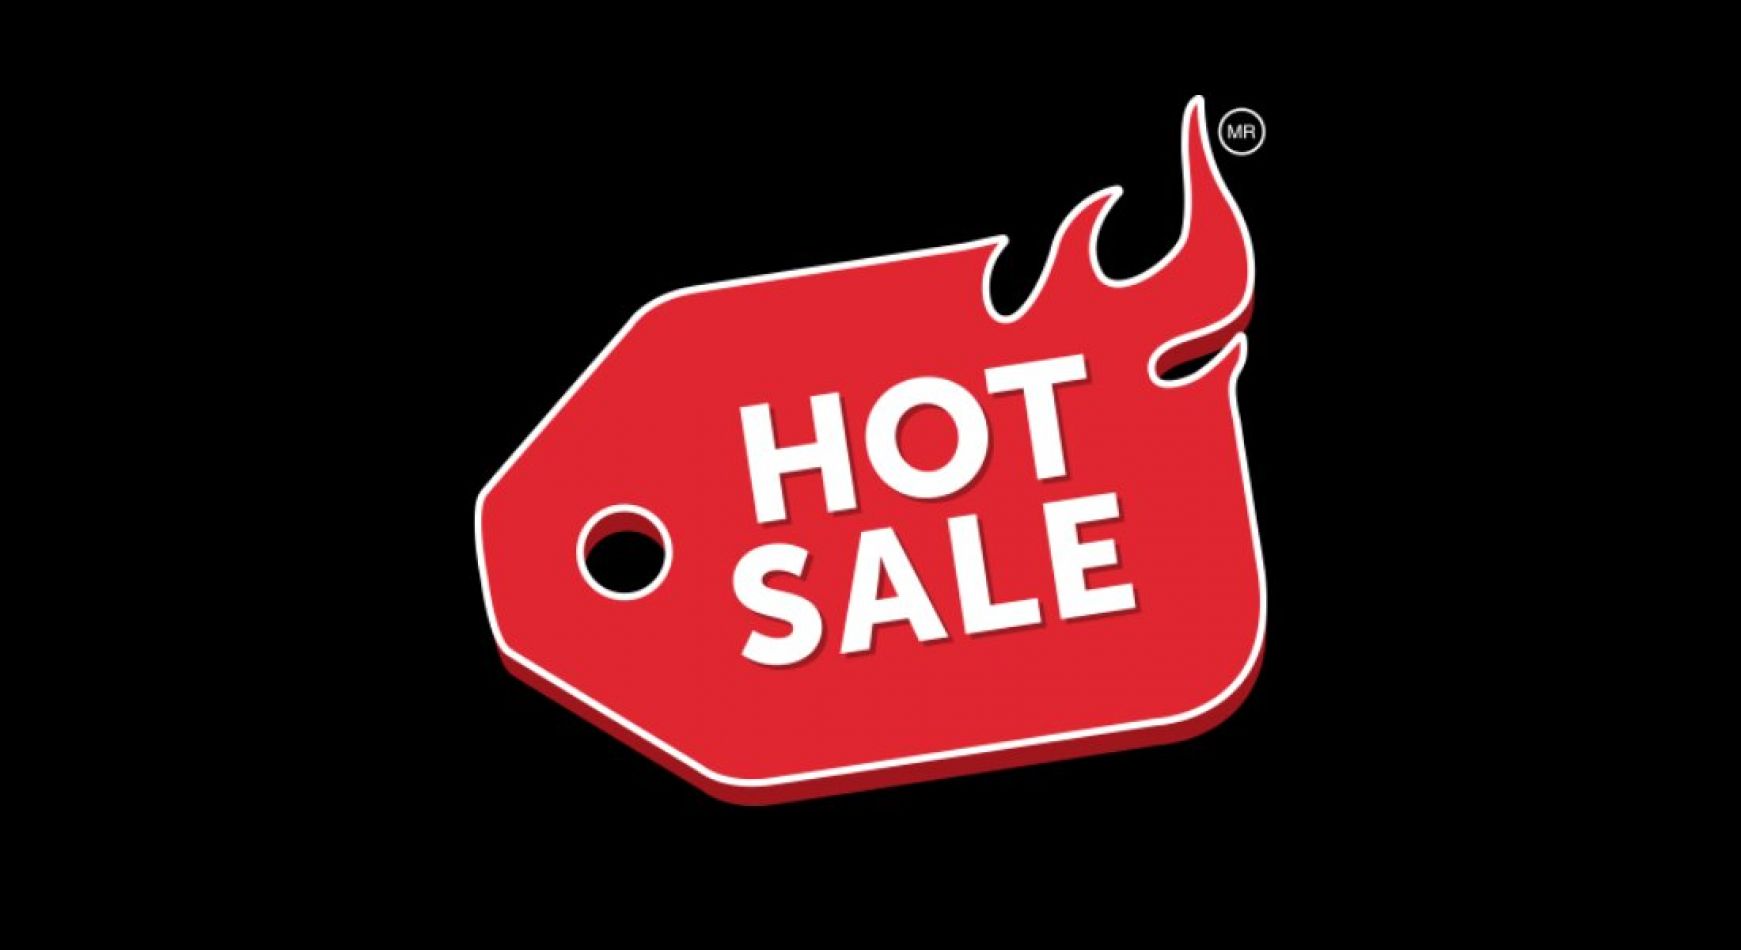 Hot Sale. (ESPECIAL)